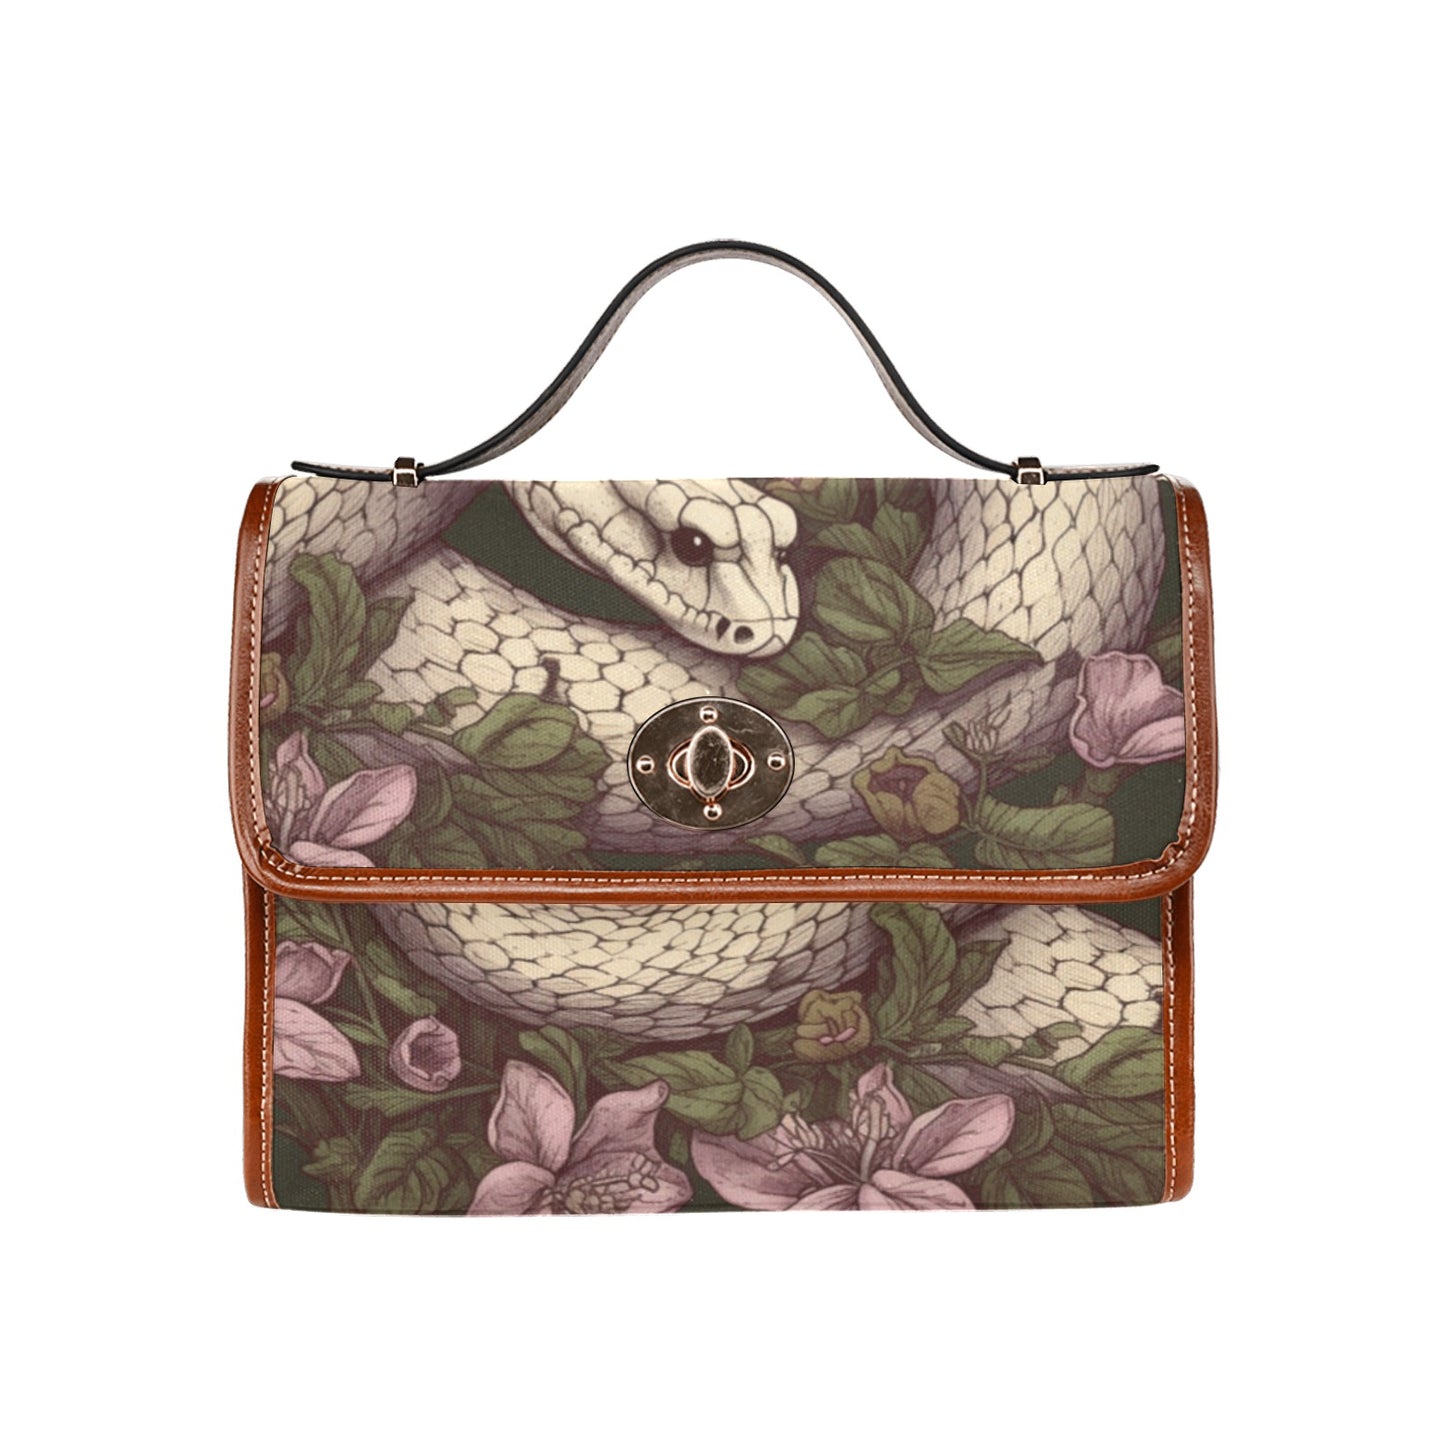 Serpent the old canvas satchel bag